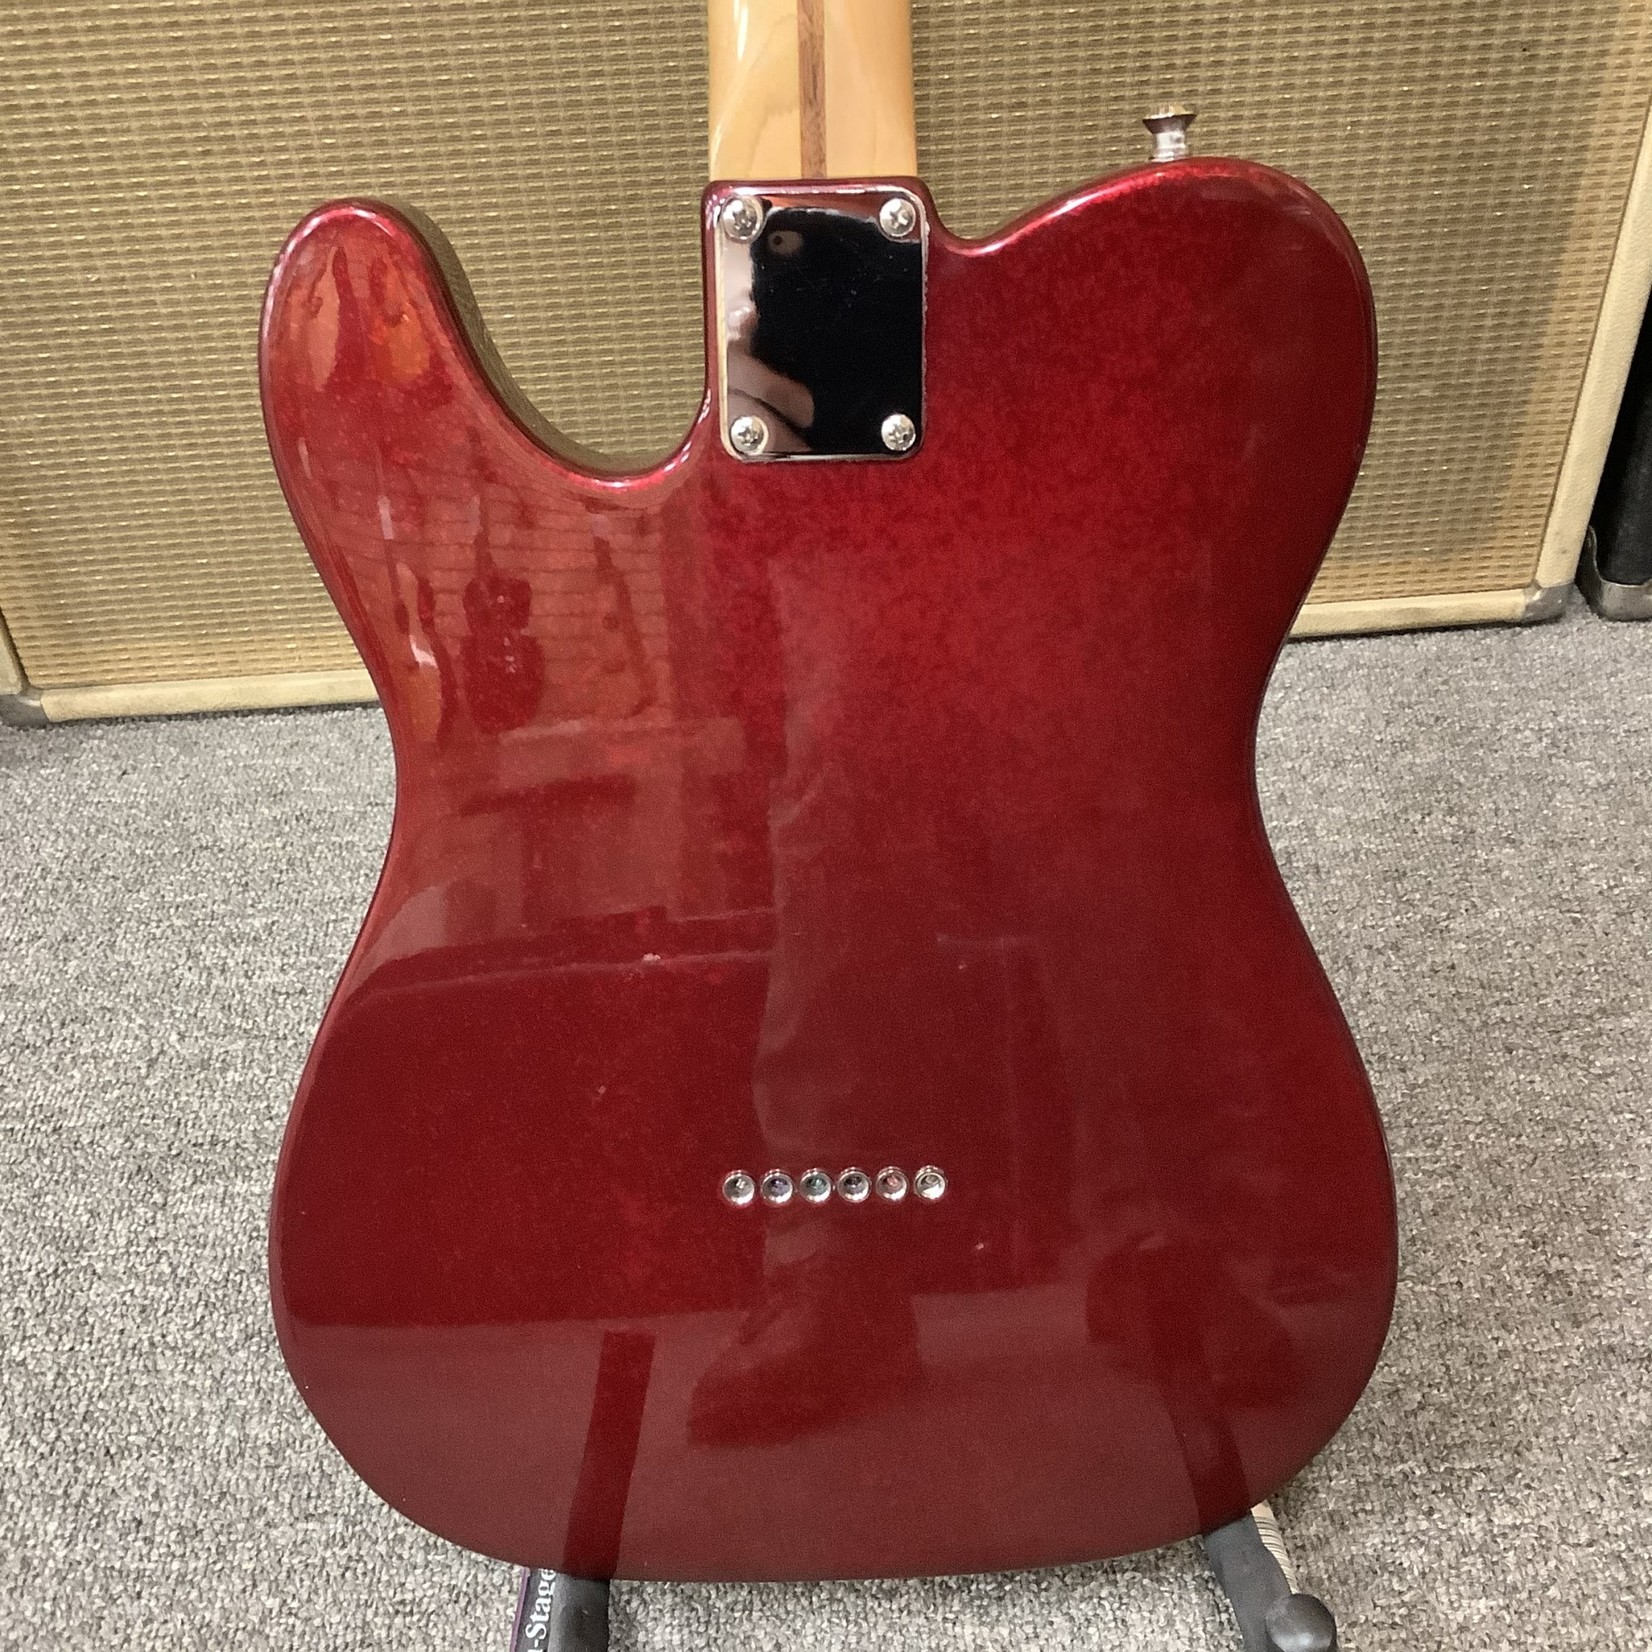 Fender 1995 Fender Telecaster "Partscaster" Red Sparkle Body, James Burton Neck